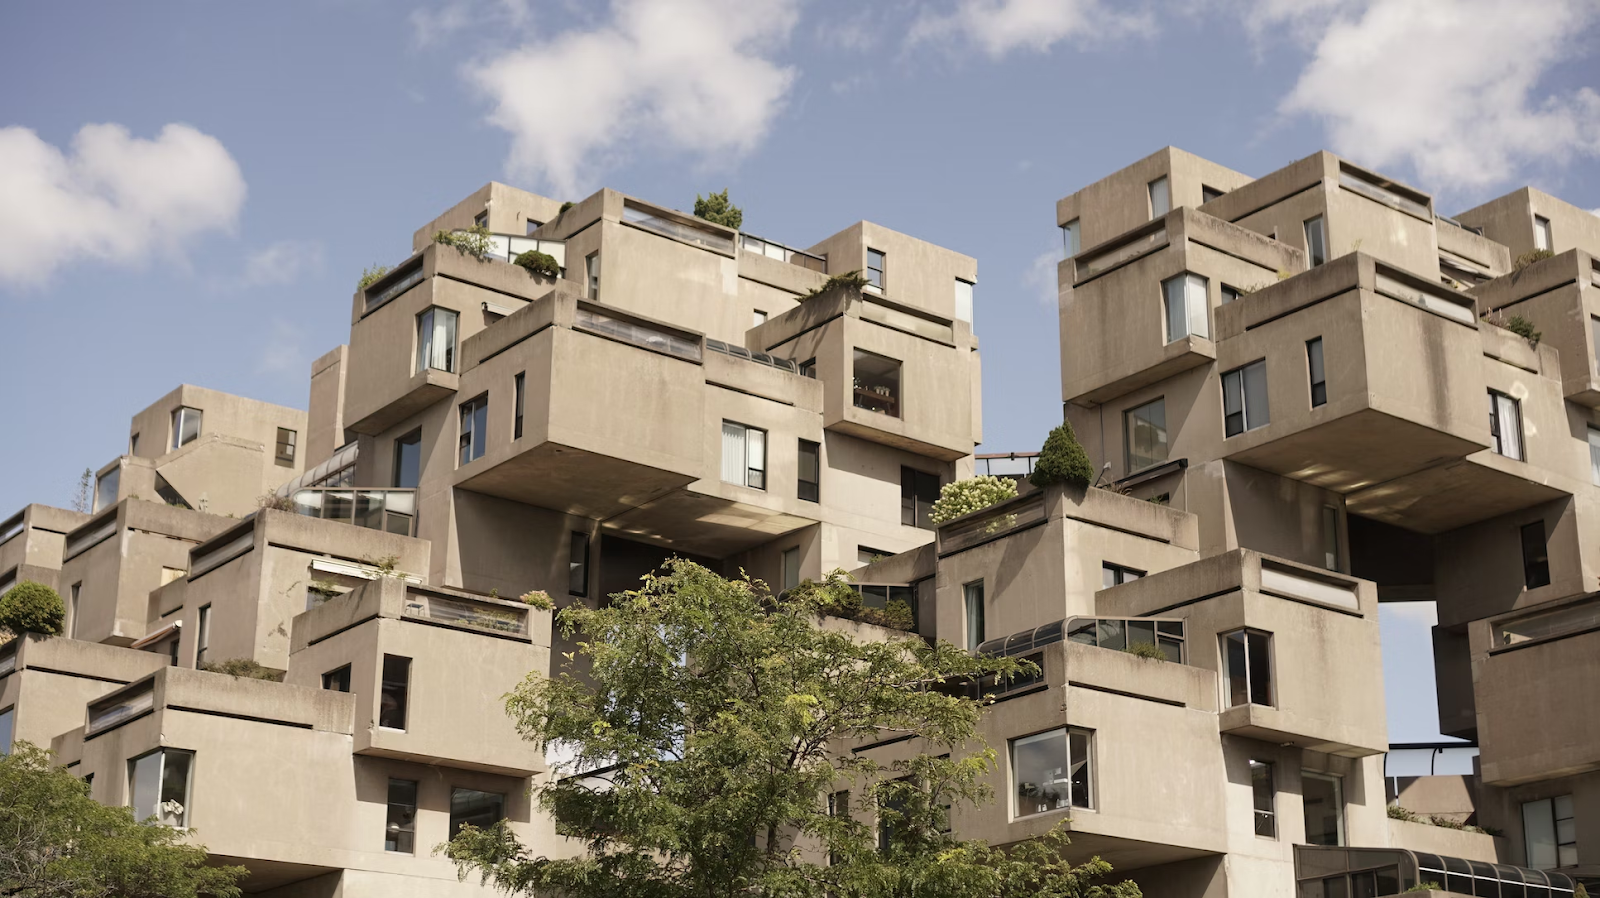 A Concrete Block Building, Habitat 67 in Montreal, Canada